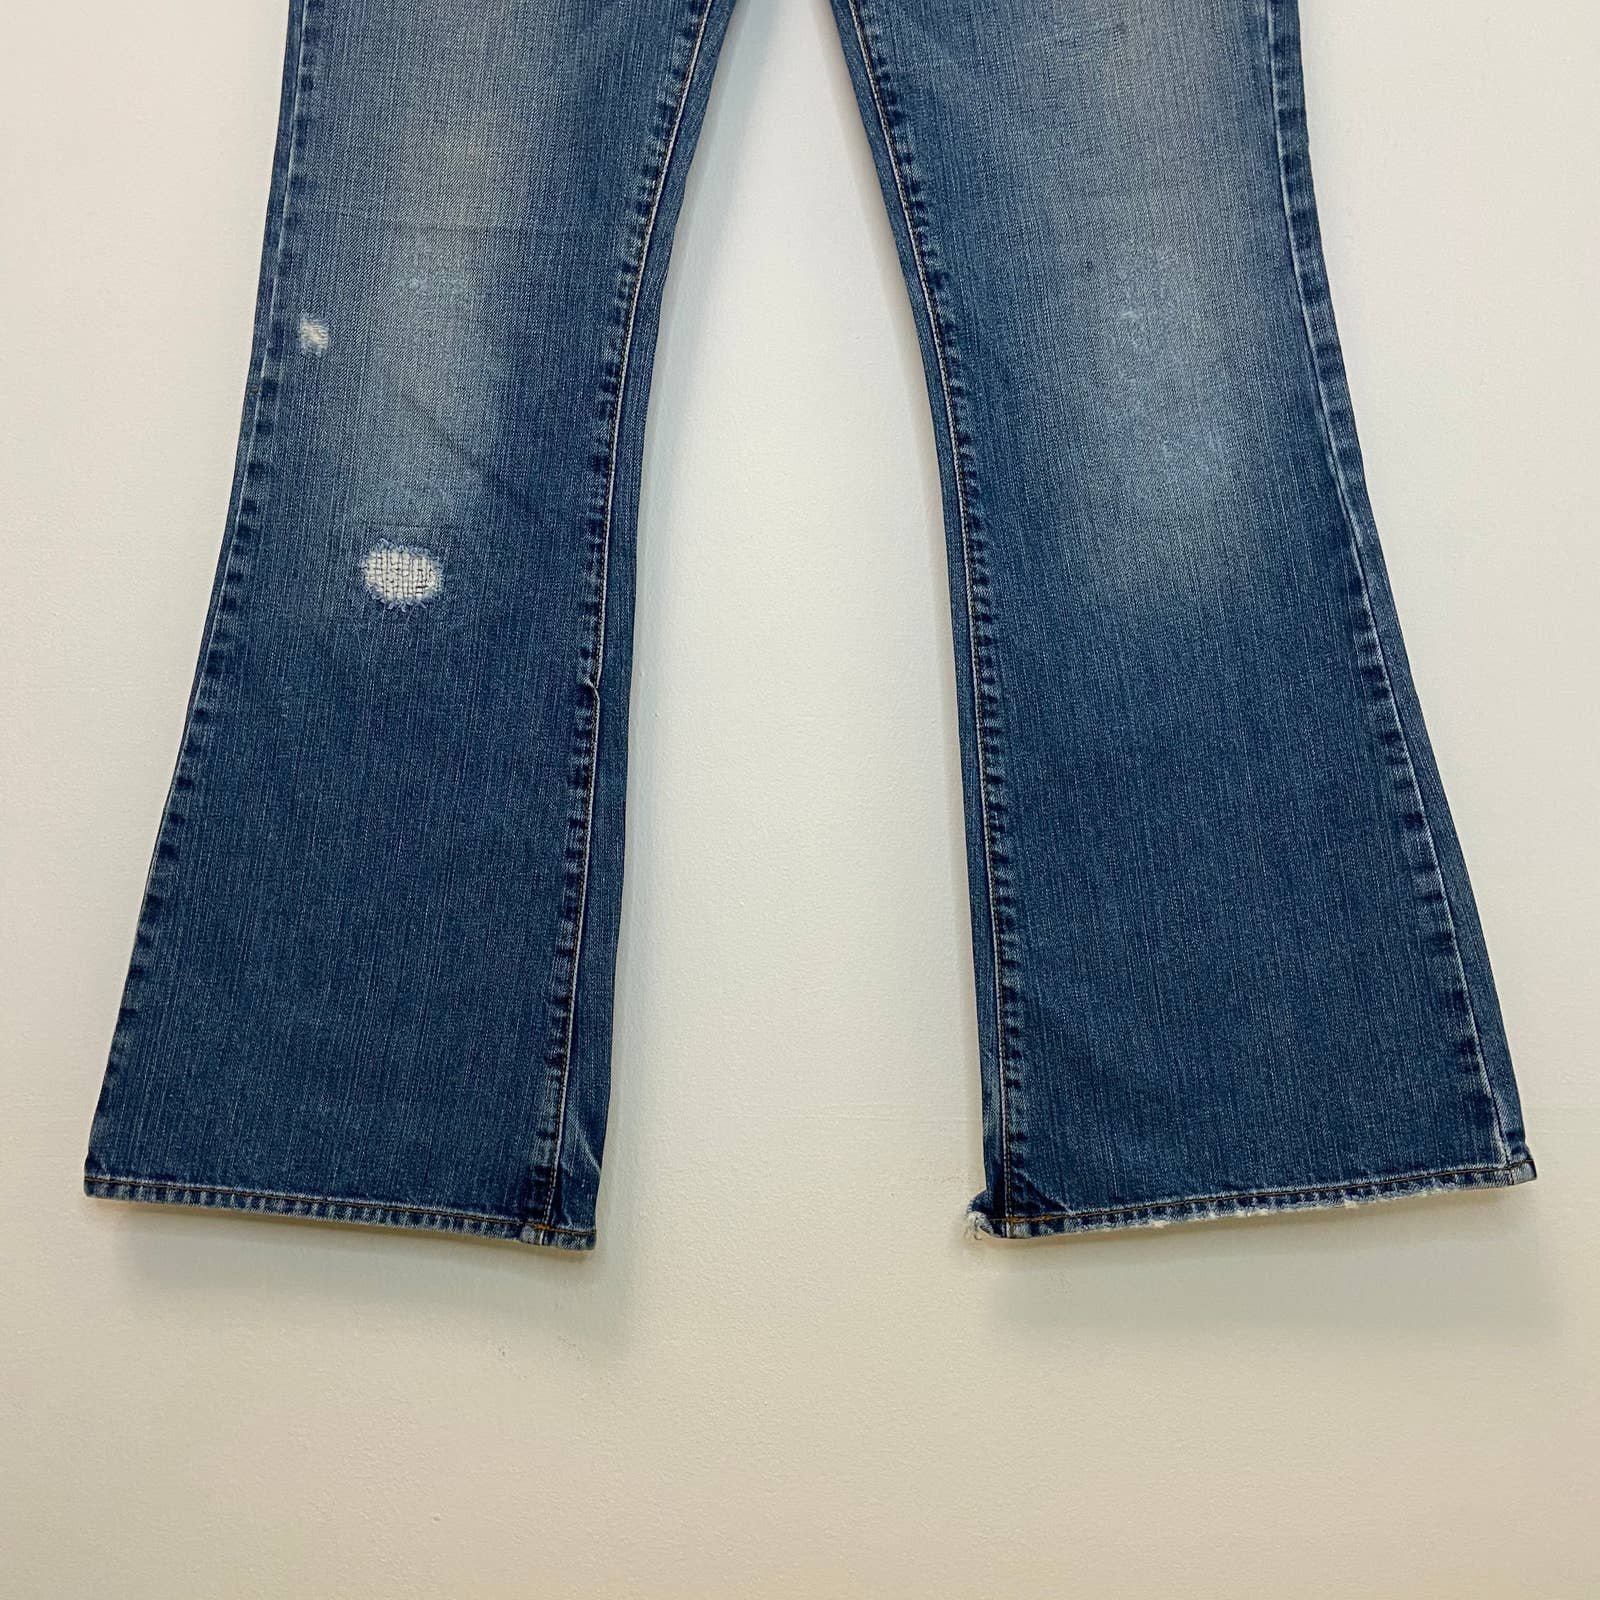 Popular Lucky Brand Distressed Jeans h5JdBi2Km New Style